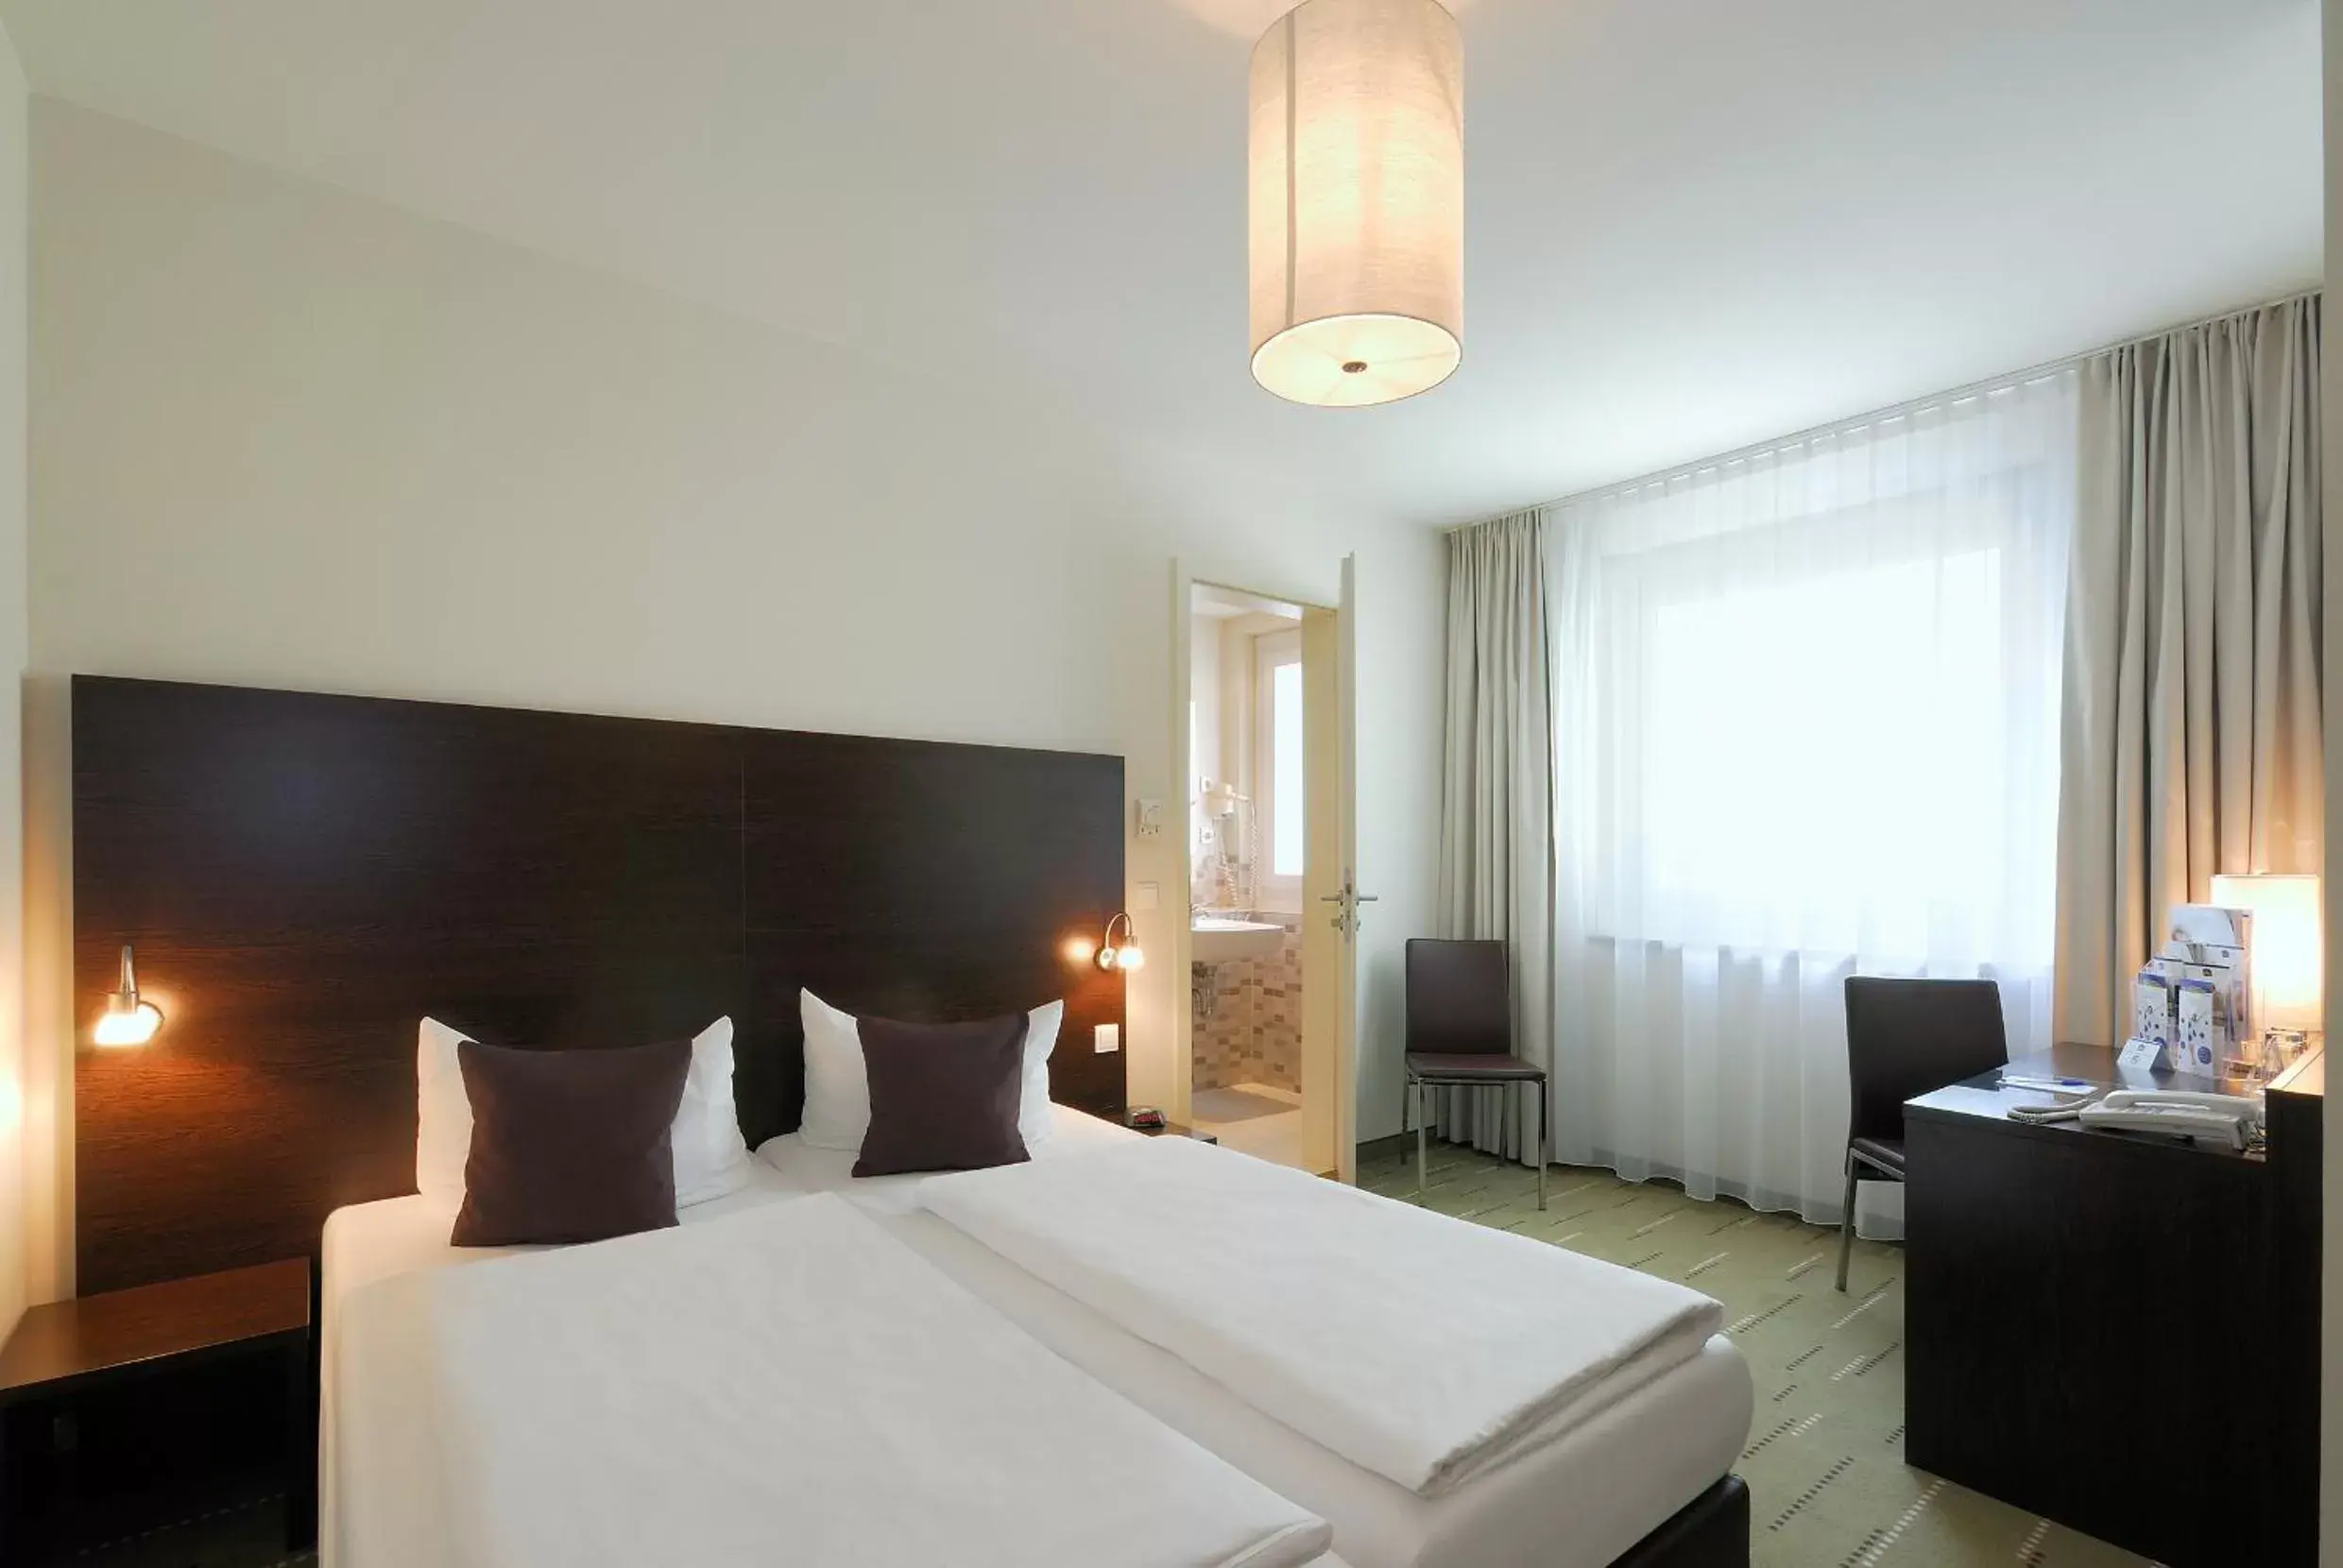 Bedroom, Room Photo in Best Western Hotel am Spittelmarkt